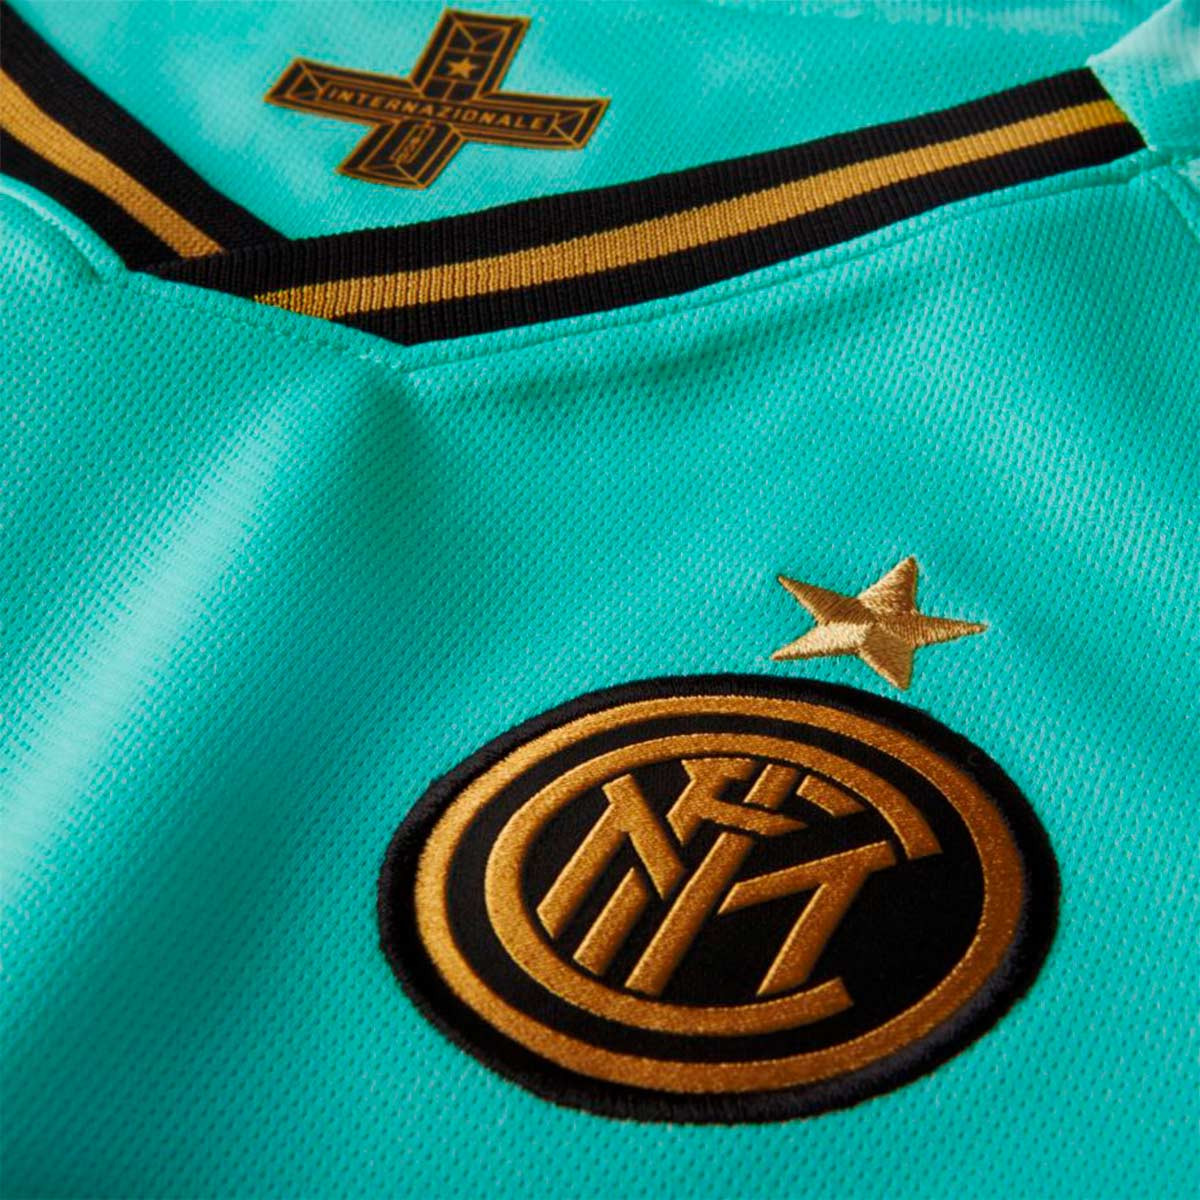 Inter De Milan Logo - Internazionale Logo And Symbol Meaning History ...